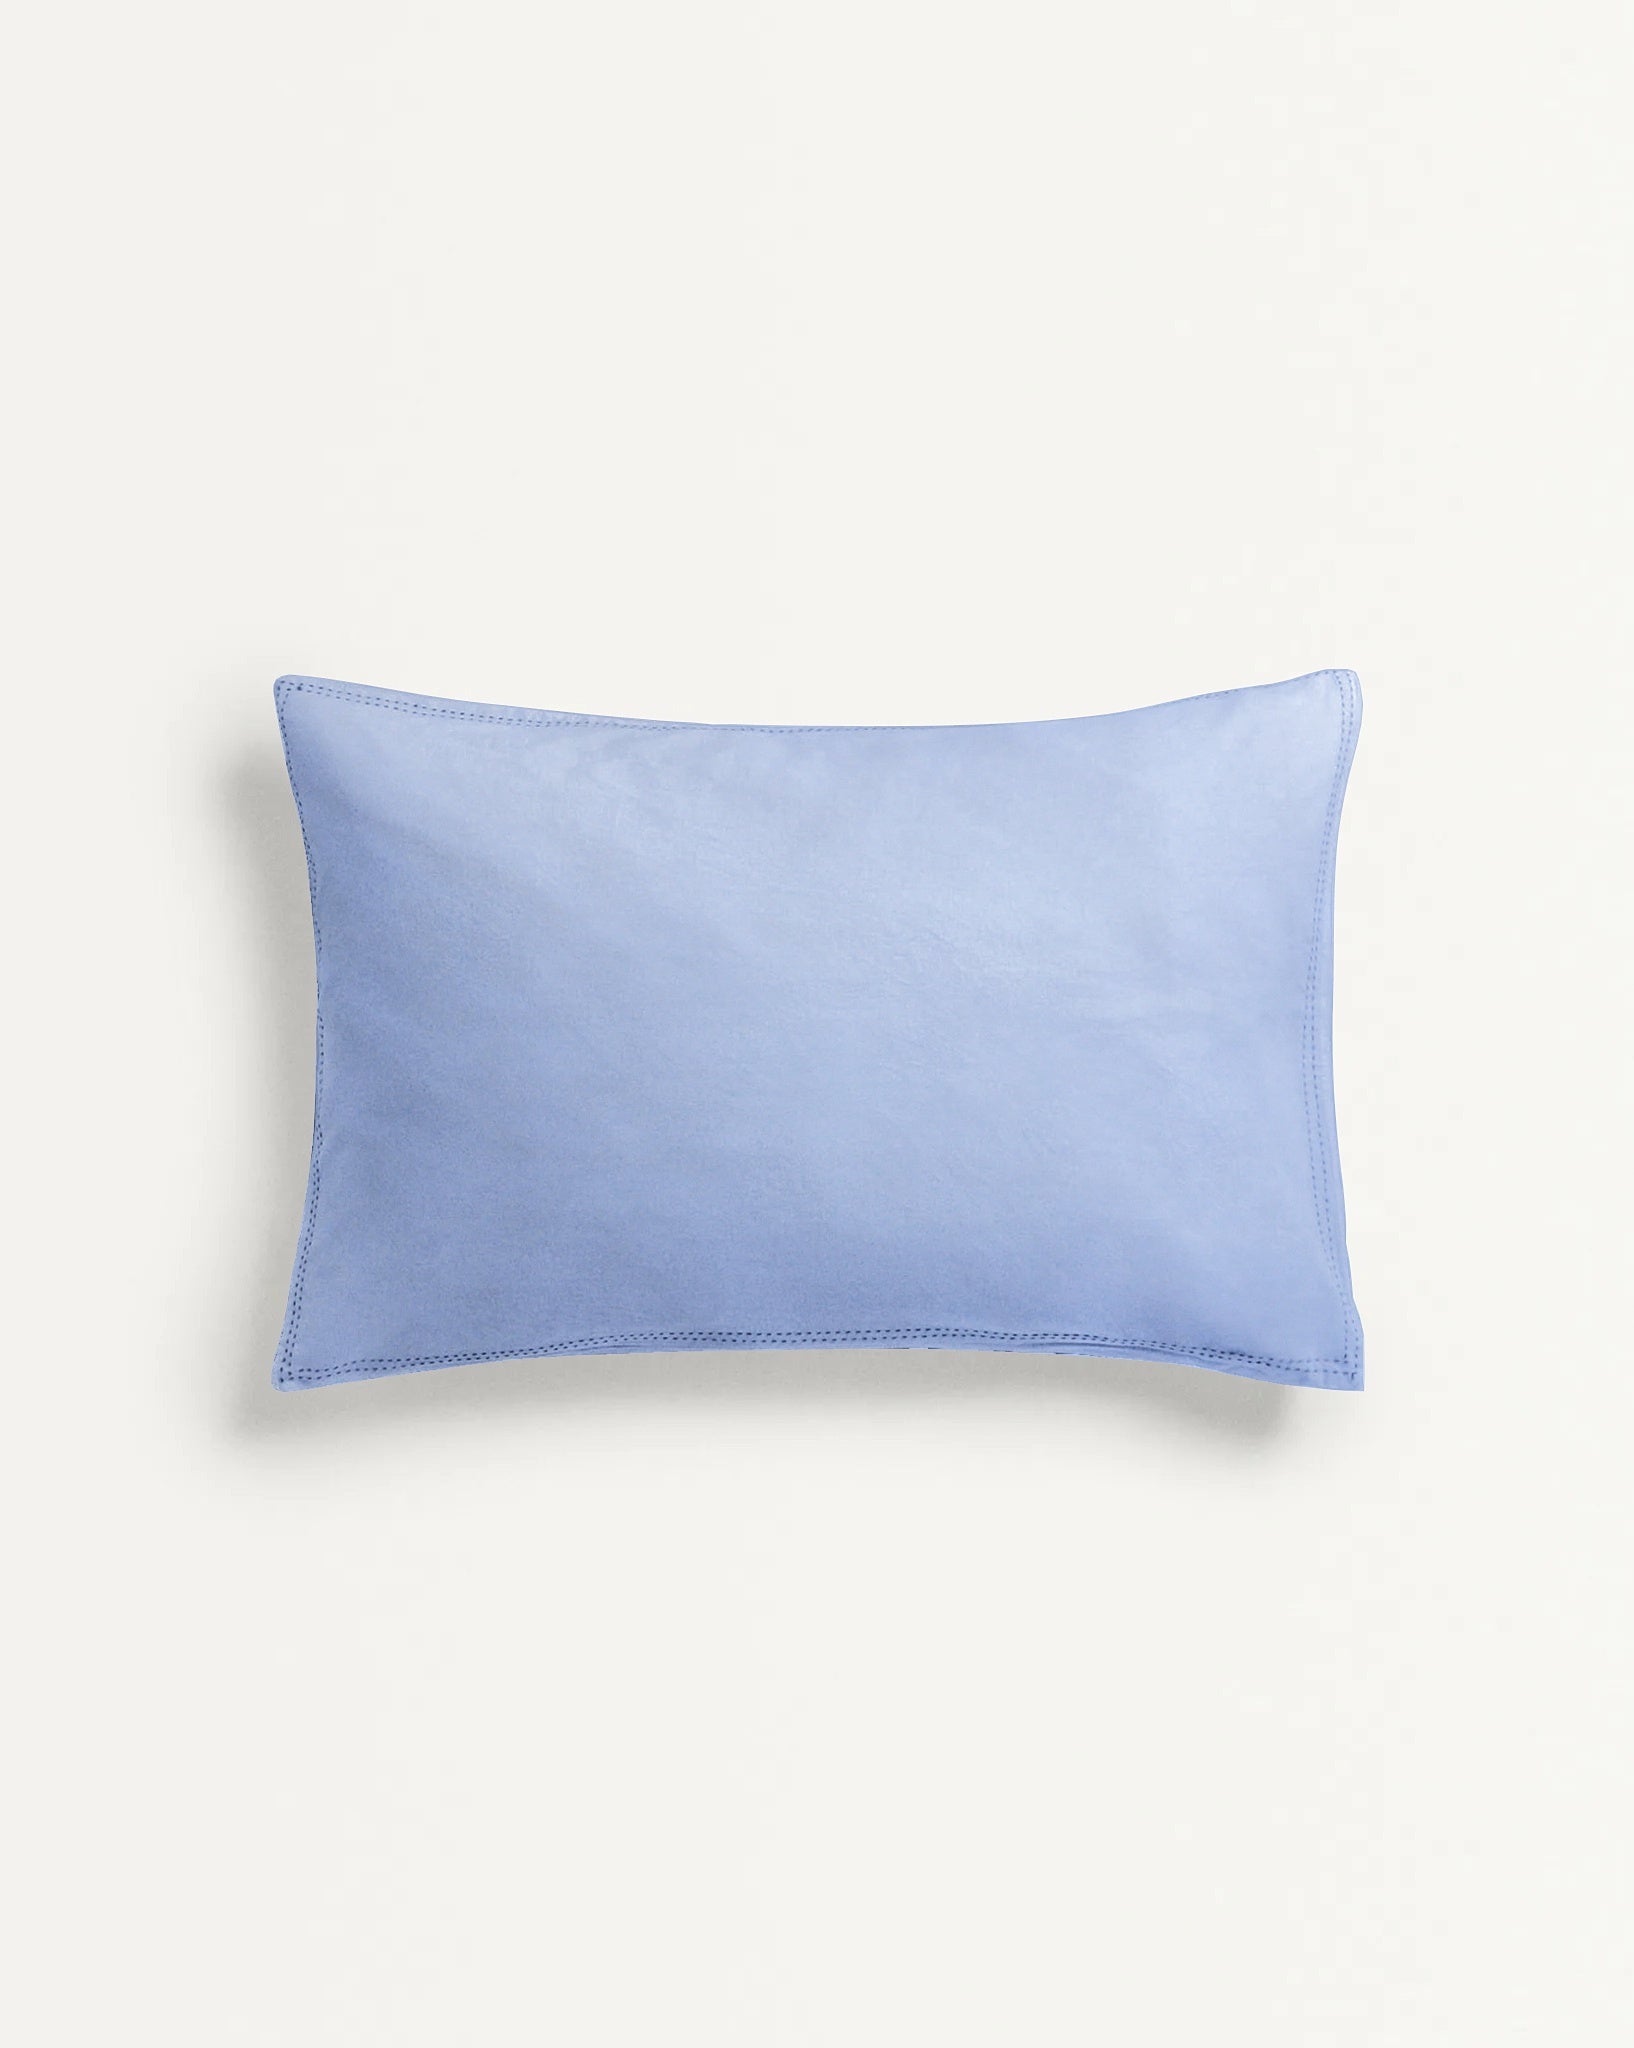 ‘Light Blue’ Organic Junior Pillow Cover